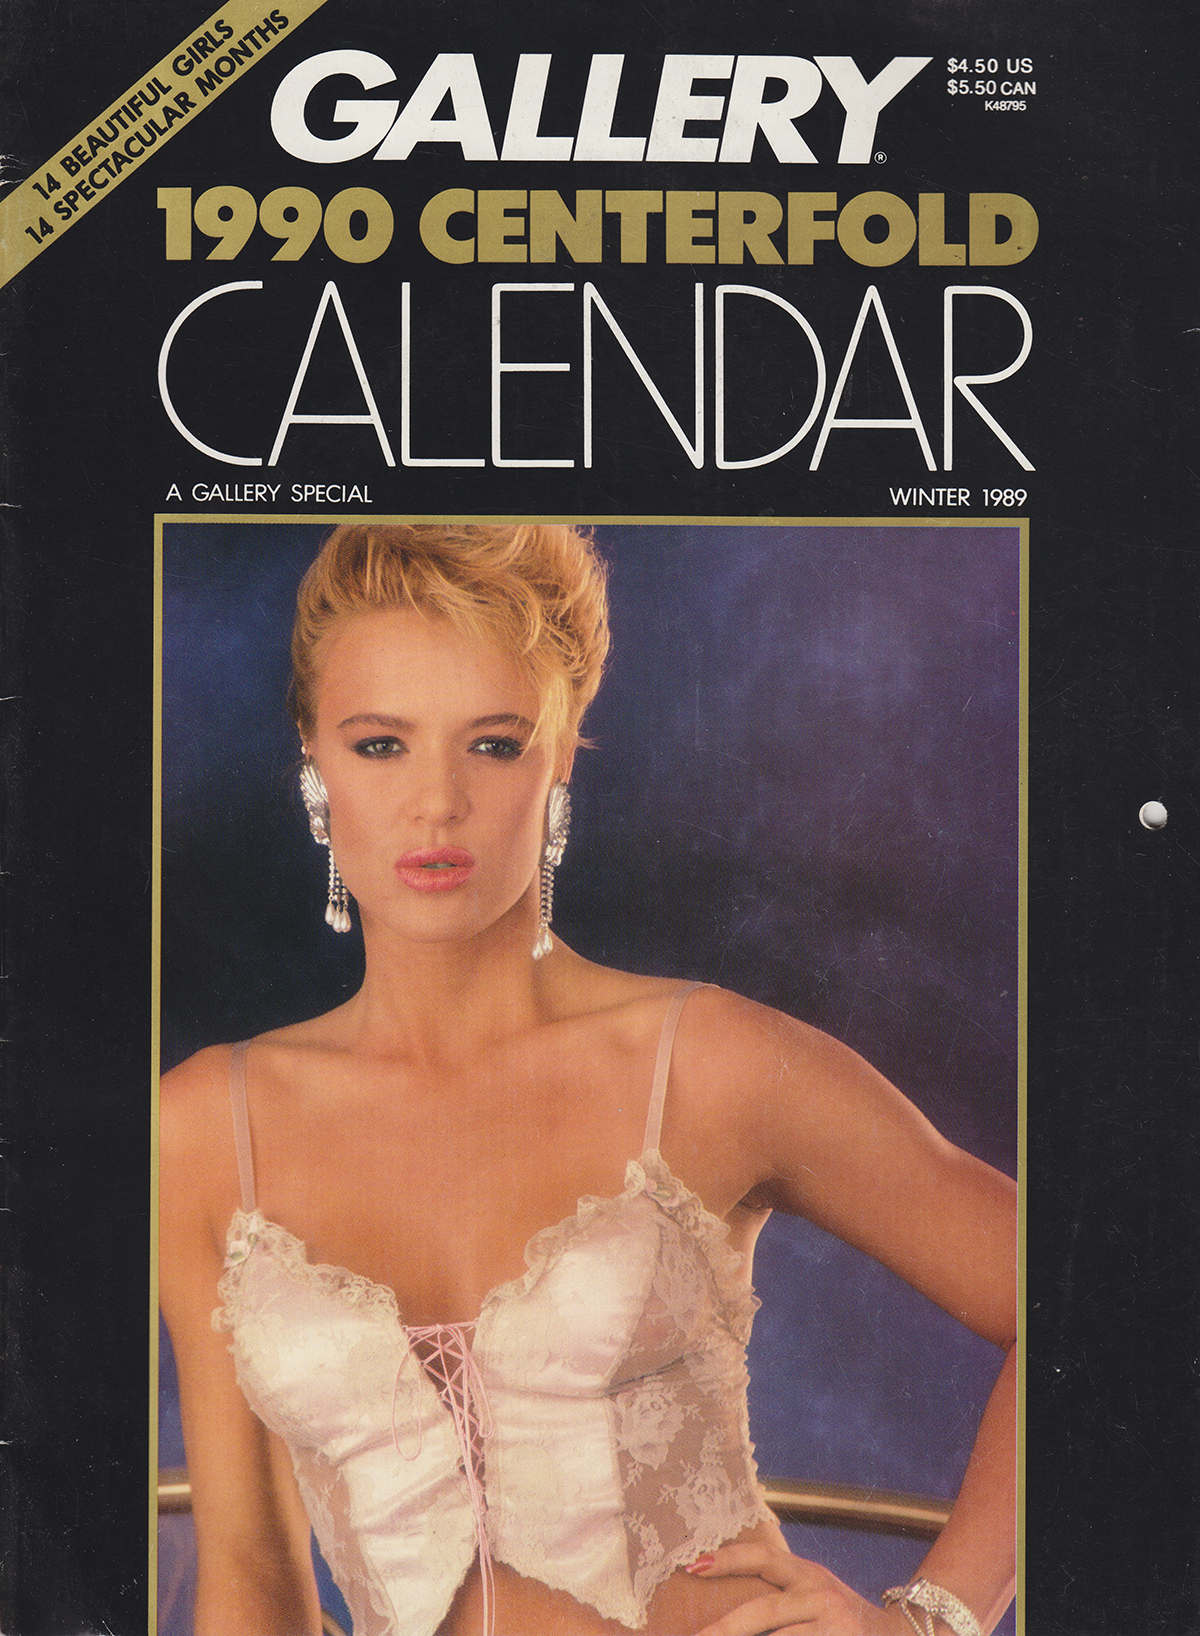 Gallery Special Winter 1989 - 1990 Centerfold Calendar magazine back issue Gallery Special magizine back copy 